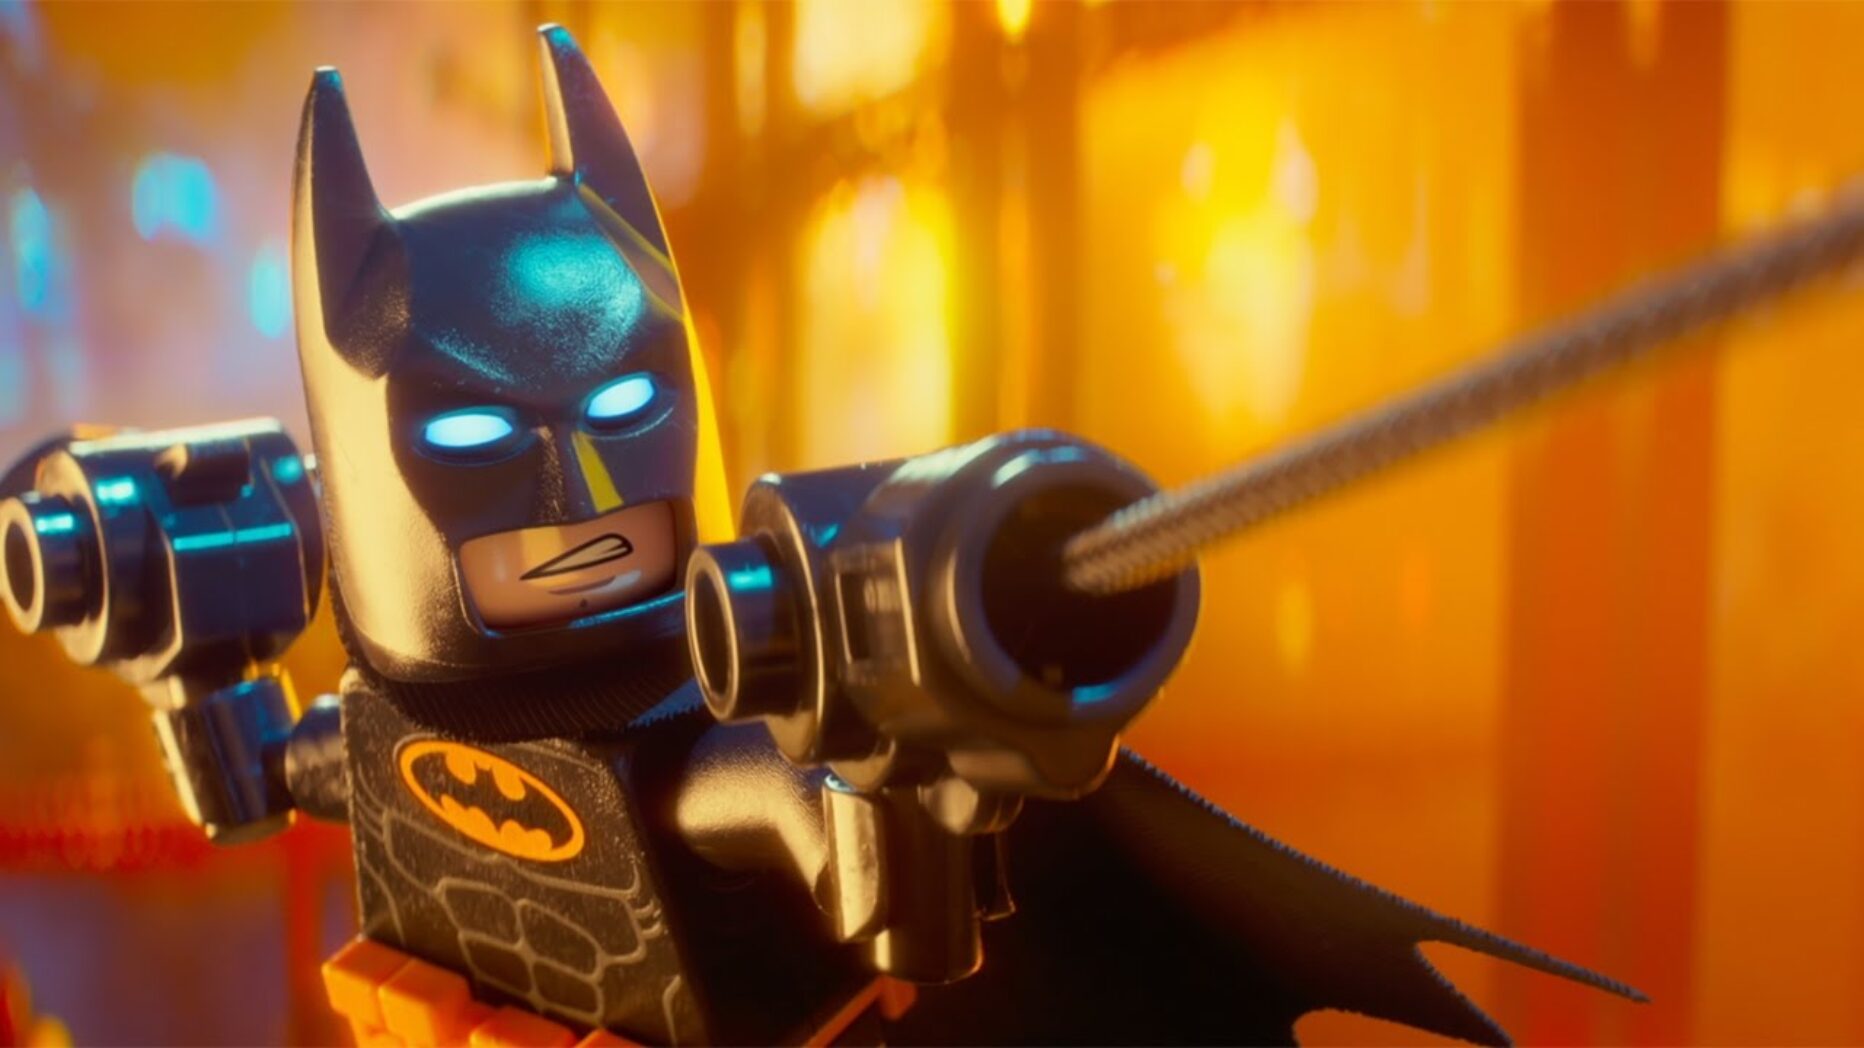 Holy bricks! The LEGO Batman!